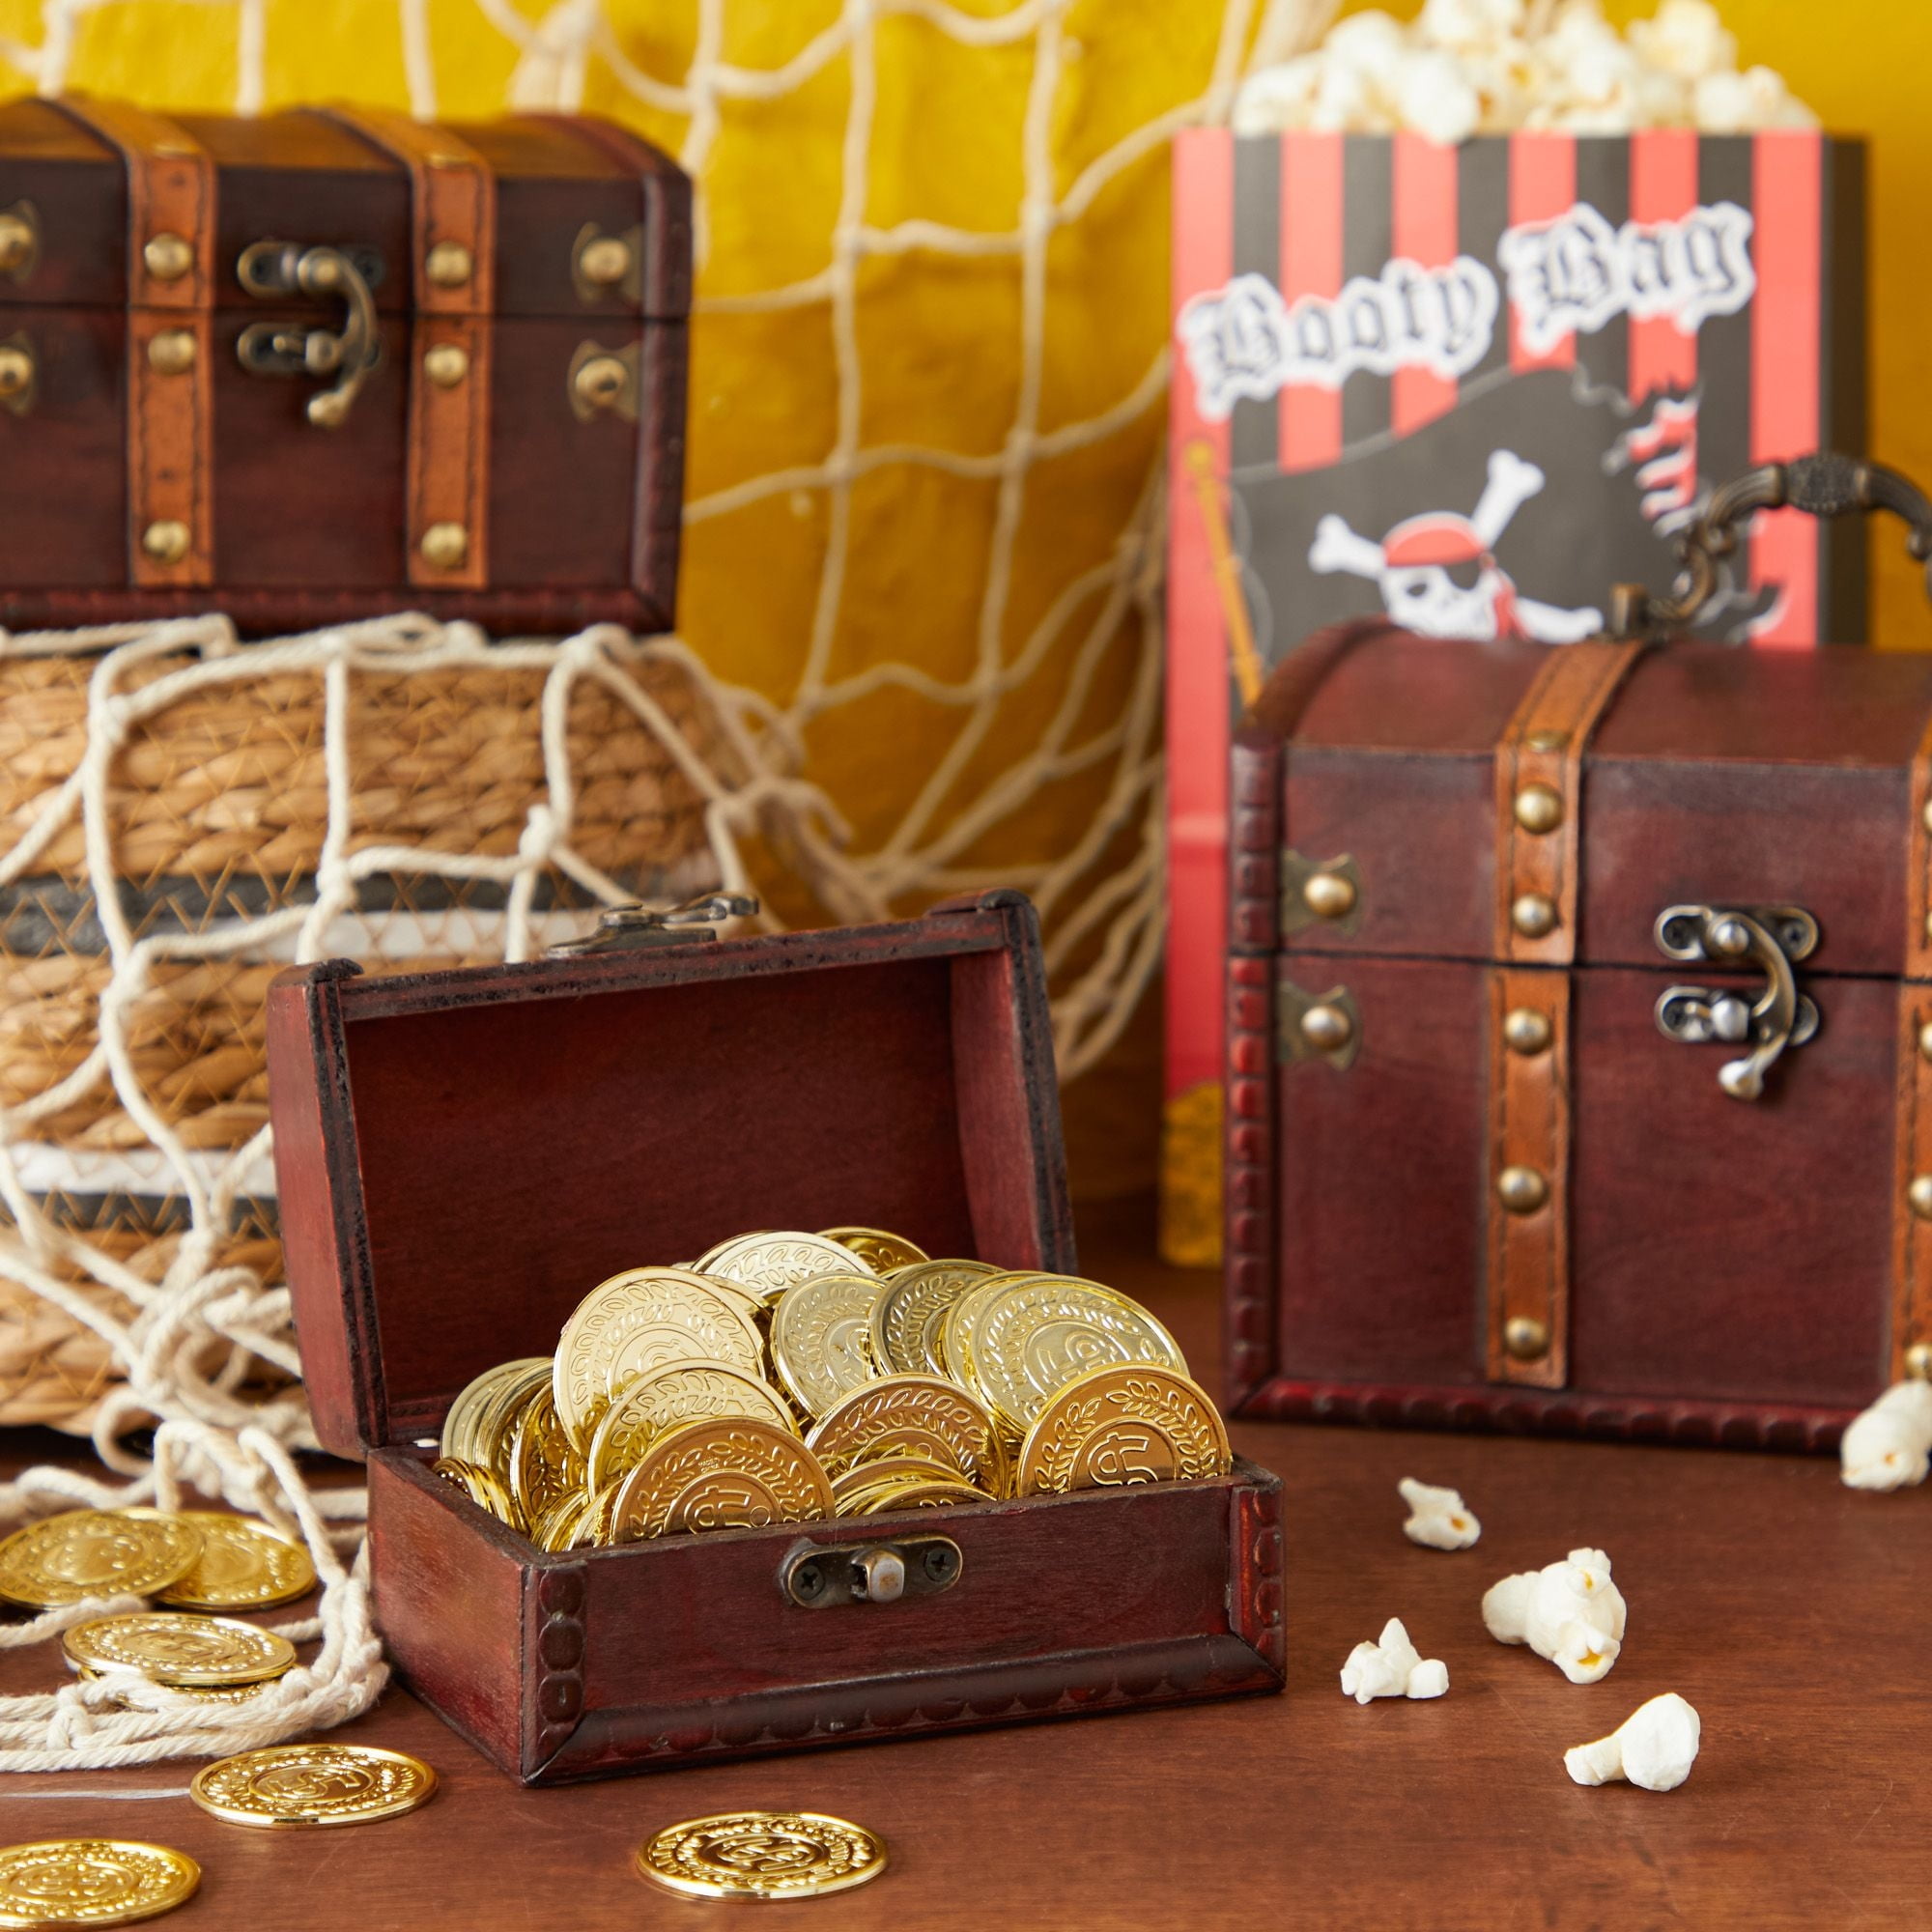 Set of 3 Wooden Treasure Chest Box, Antique Decorative Storage Trunks